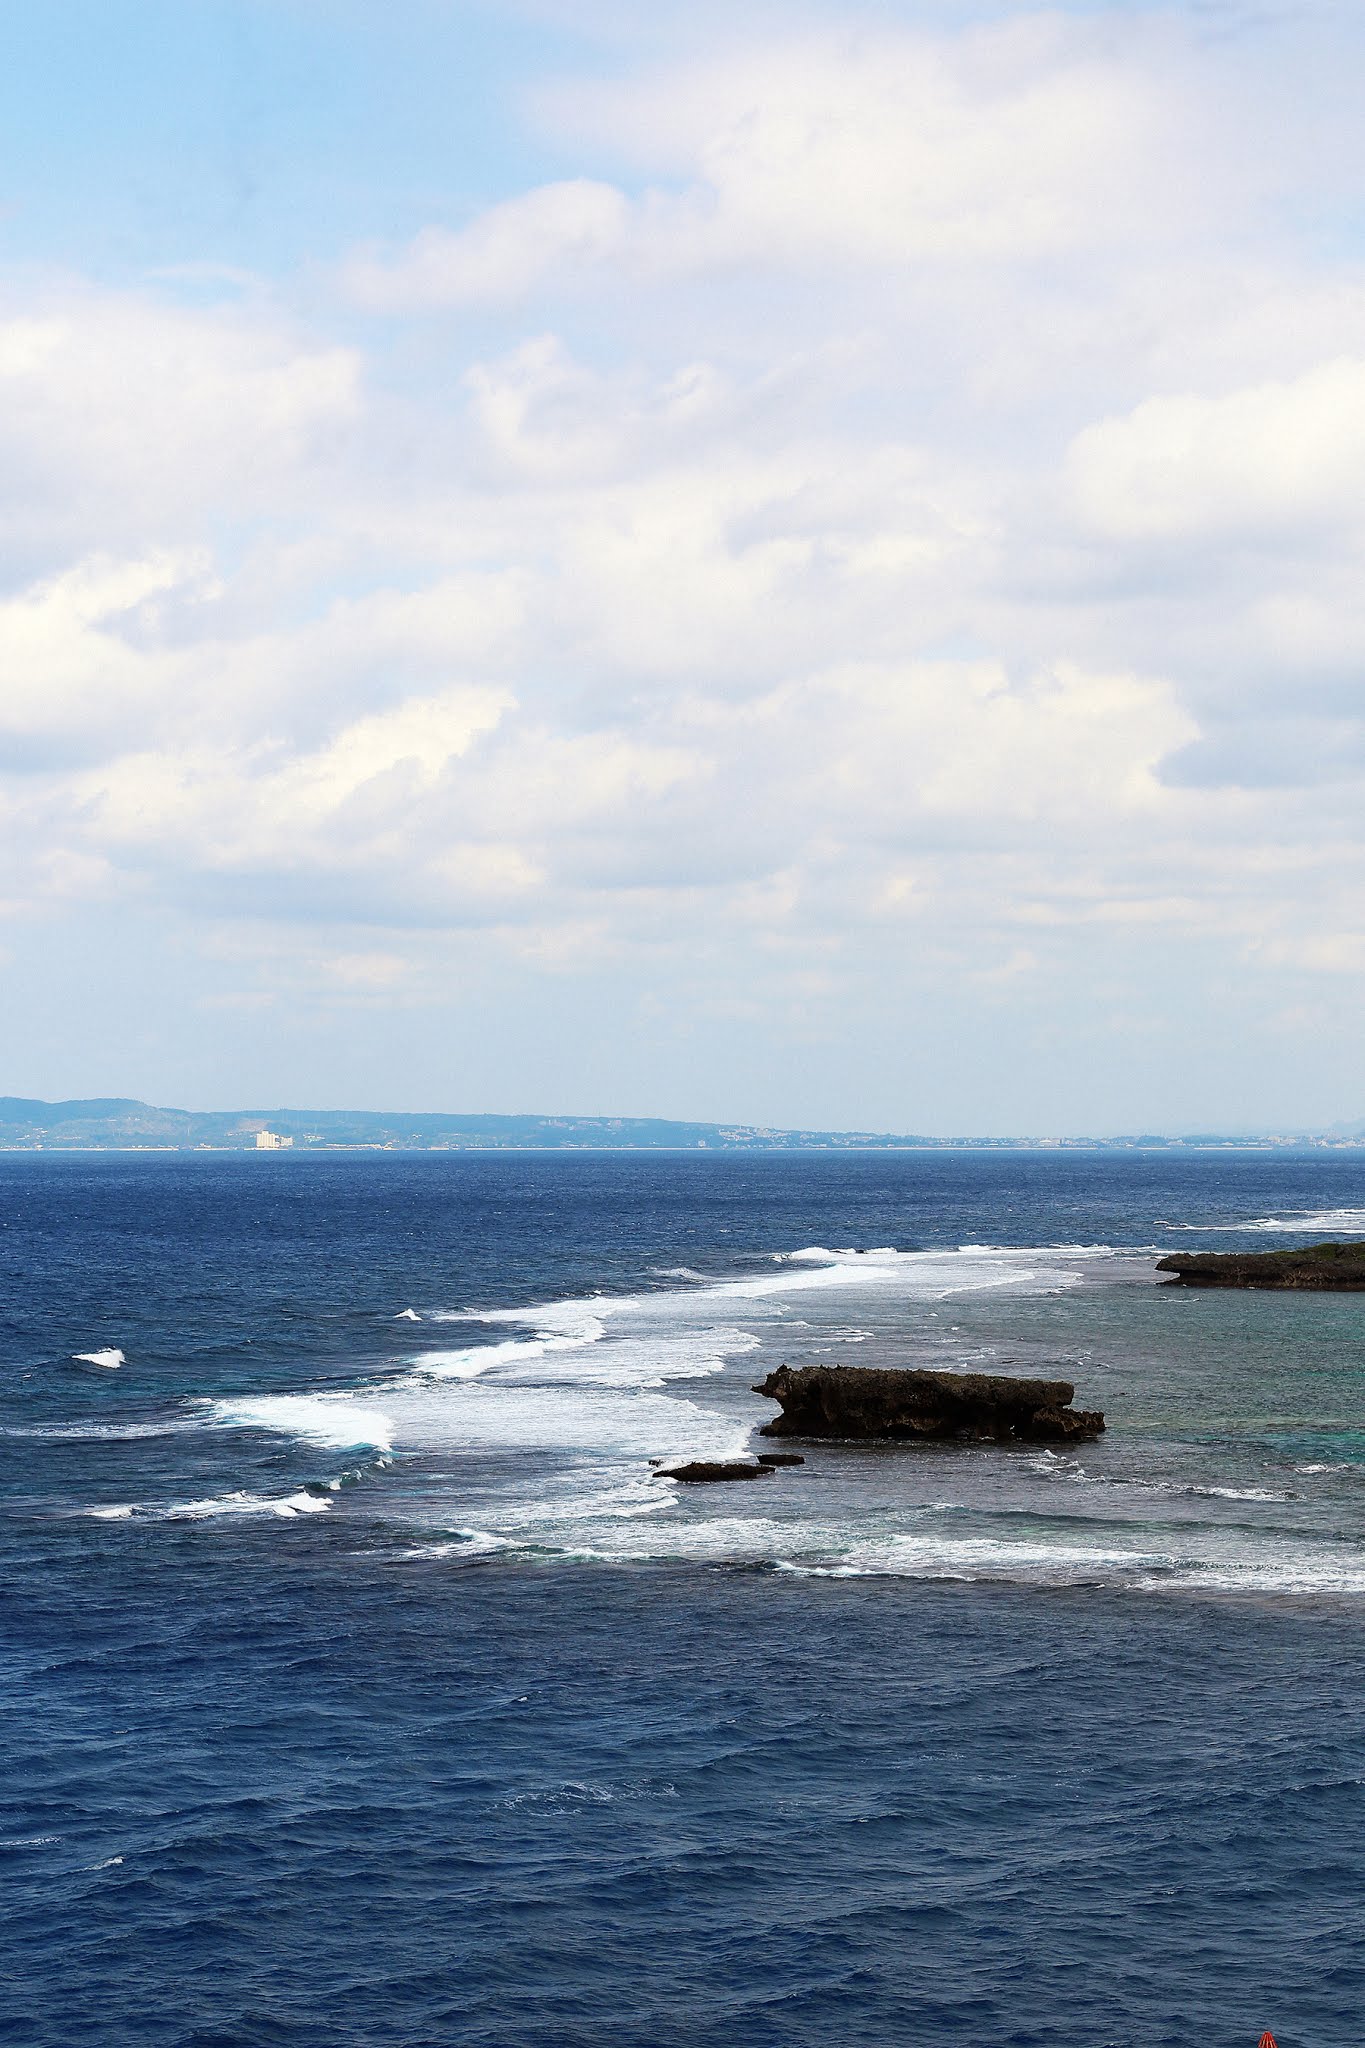 Okinawa: 48 Hours in The Hawaii of Japan by Posh, Broke, & Bored